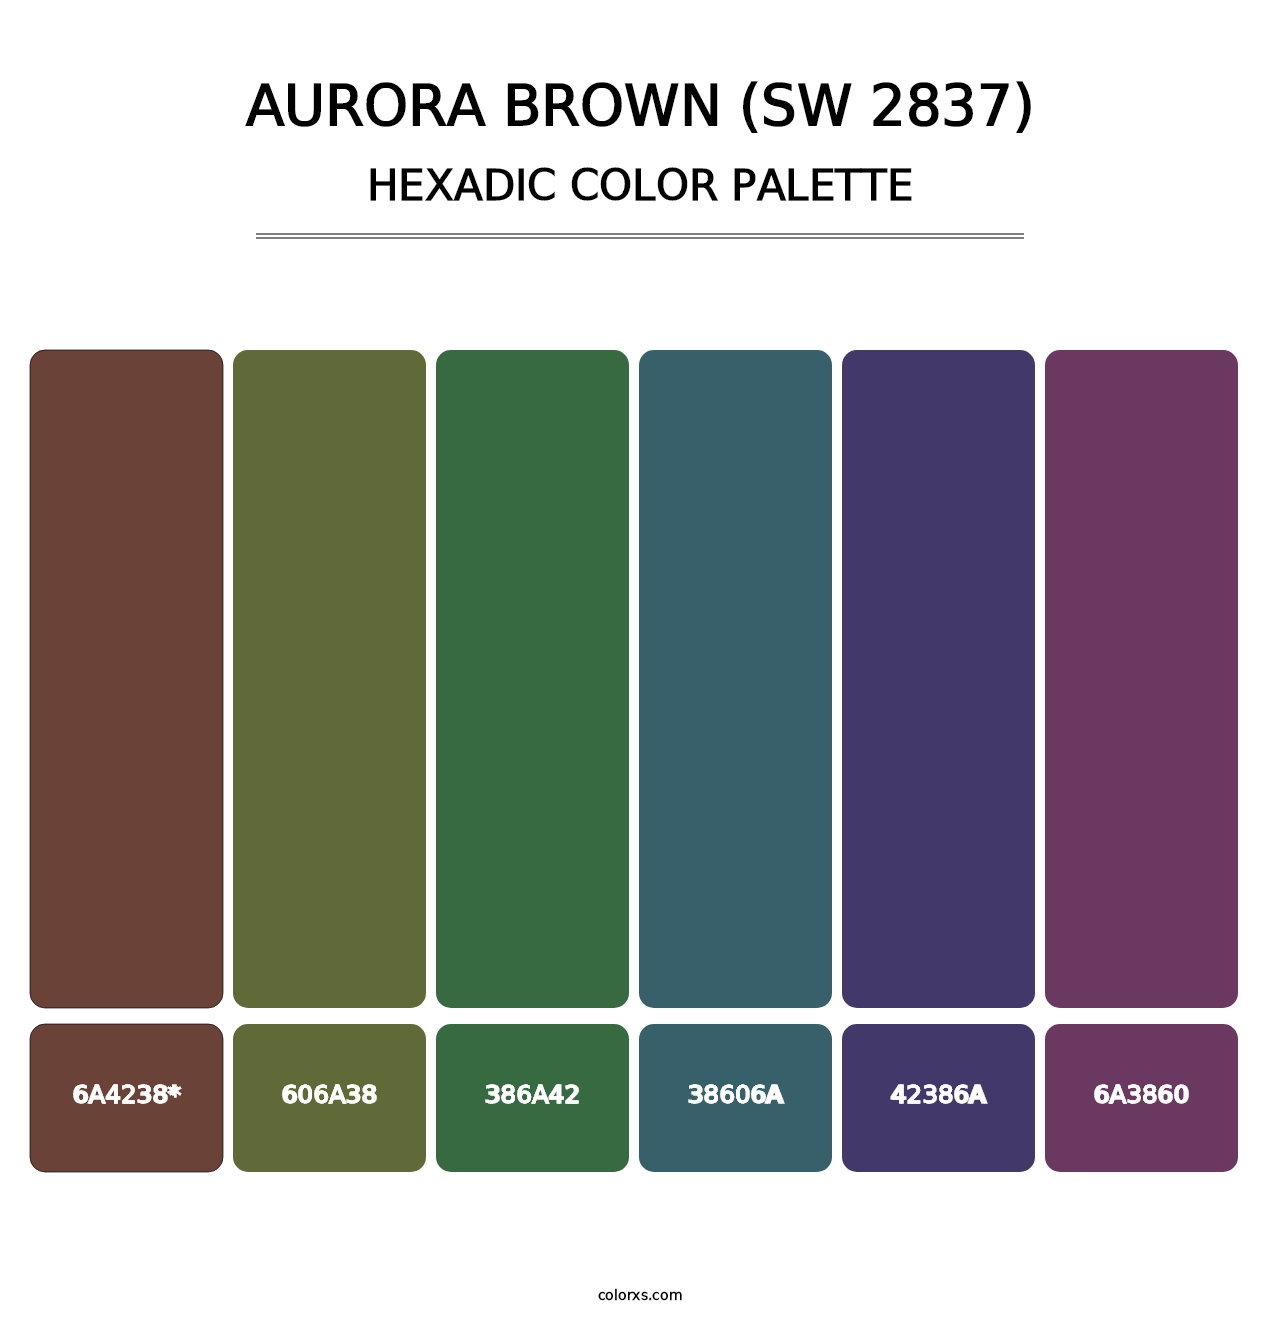 Aurora Brown (SW 2837) - Hexadic Color Palette